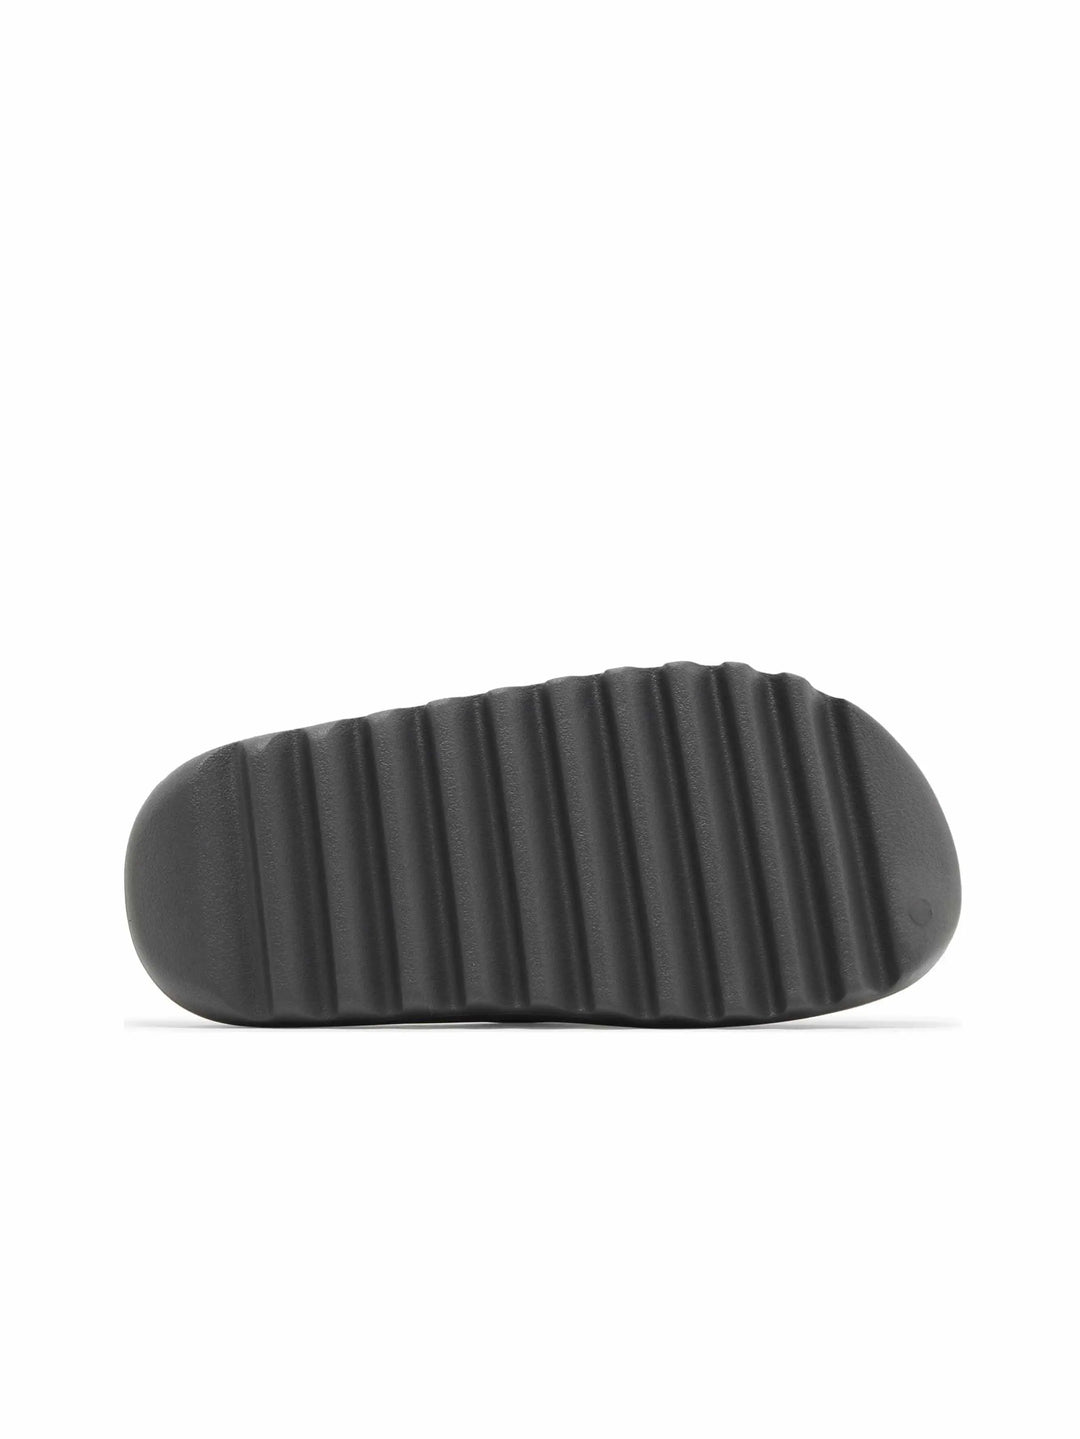 adidas Yeezy Slide Granite - Prior